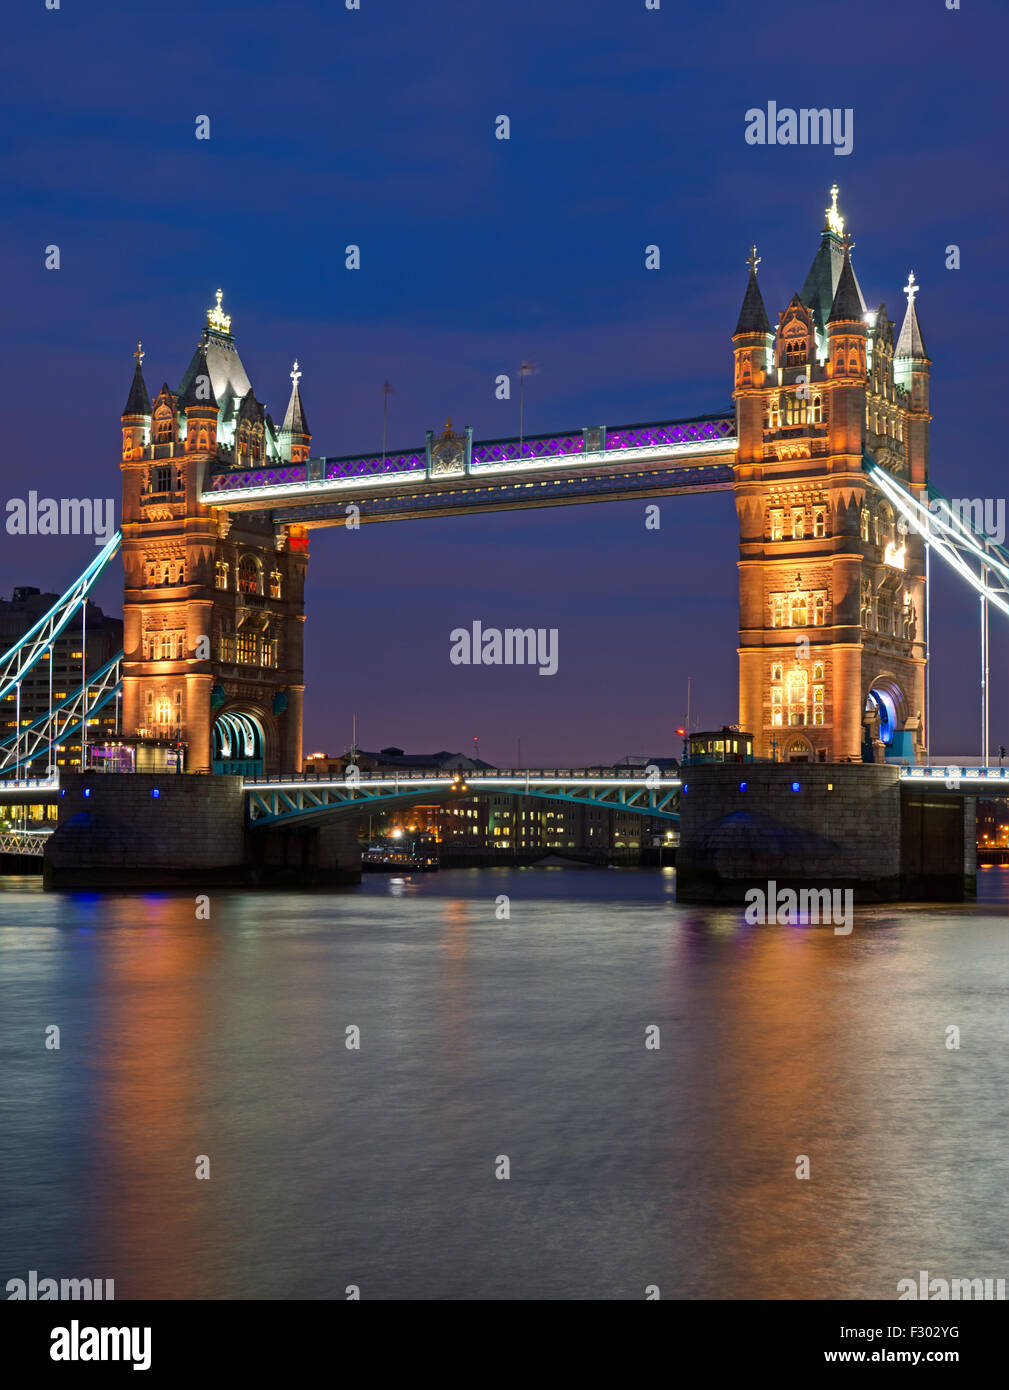 The illuminated Tower Bridge in London after sunset Stock Photo